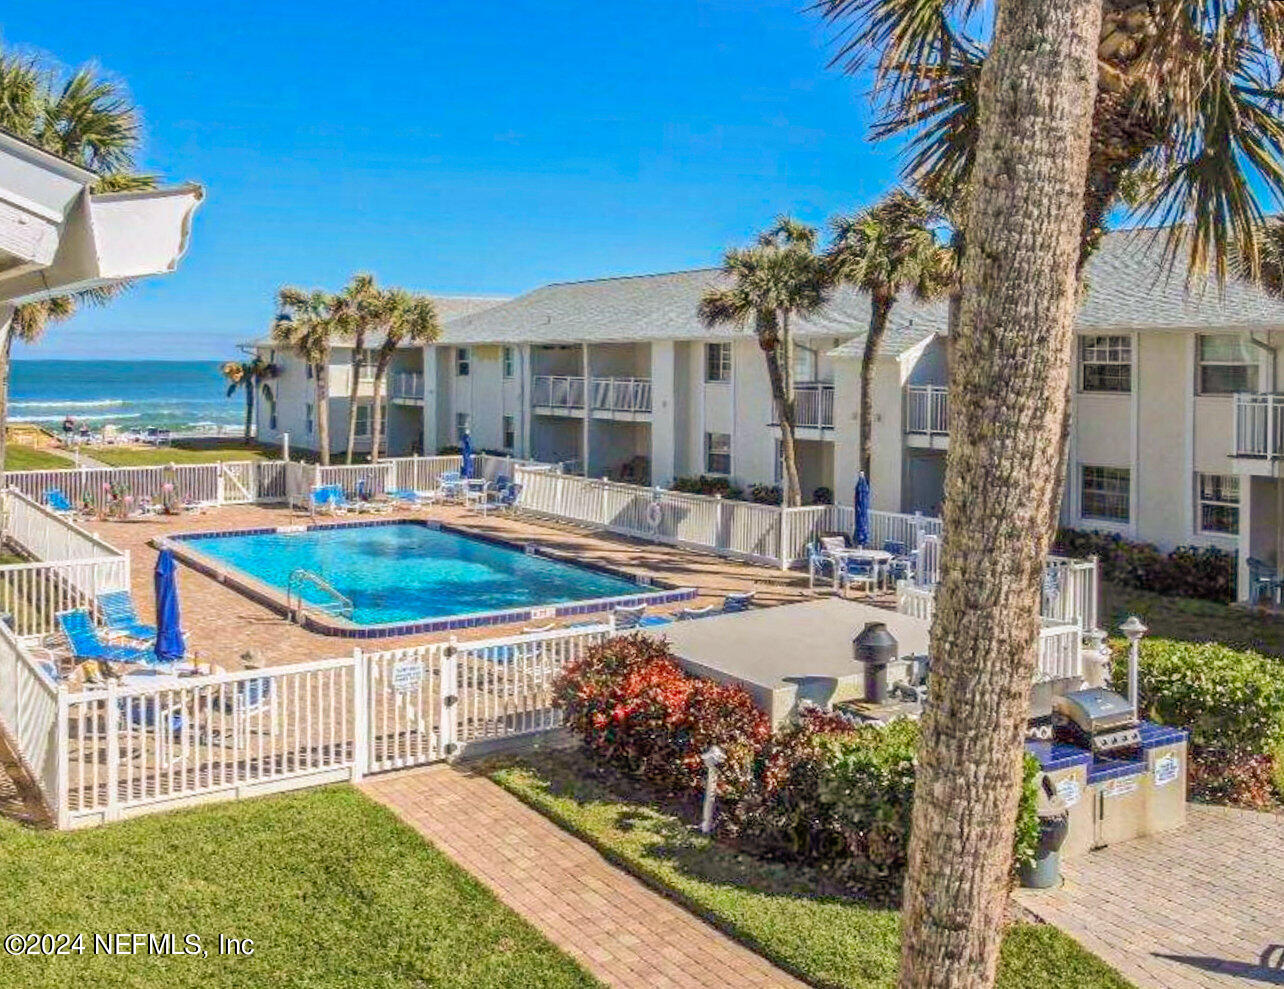 New Smyrna Beach, FL home for sale located at 4225 S ATLANTIC Avenue 210, New Smyrna Beach, FL 32169